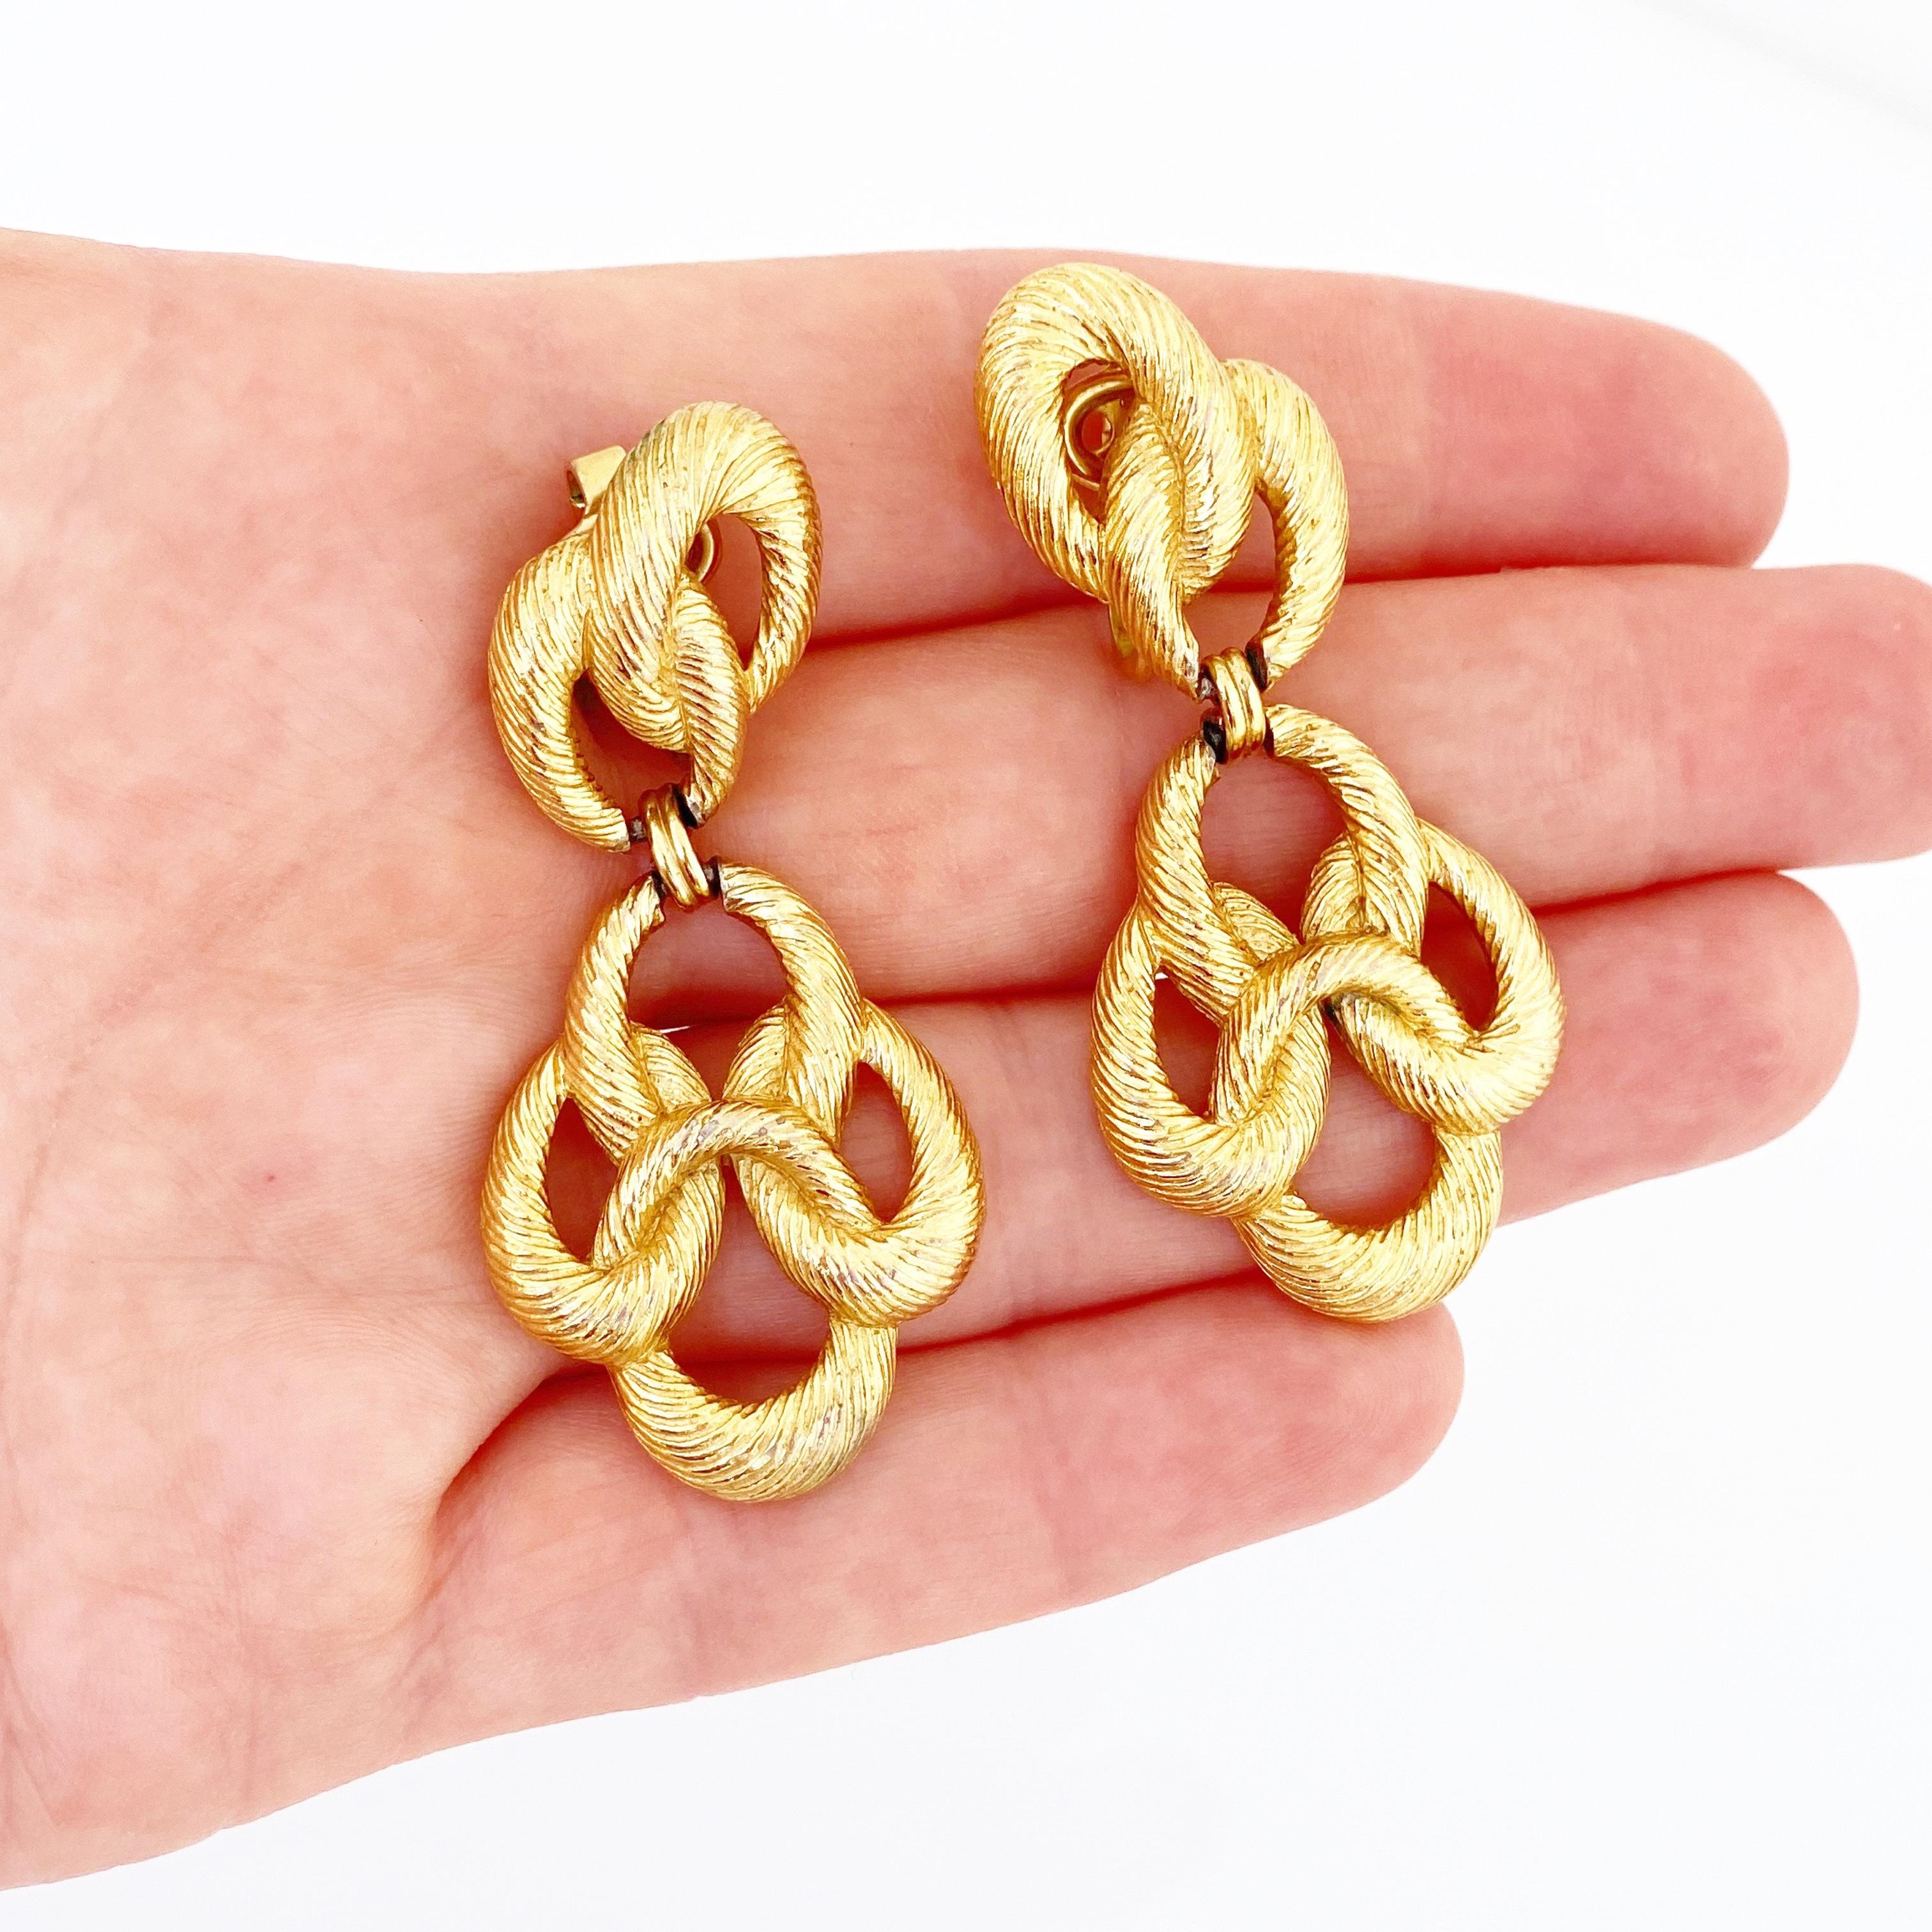 Modern Textured Gold Interlocking Rings Drop Earrings By Crown Trifari, 1960s